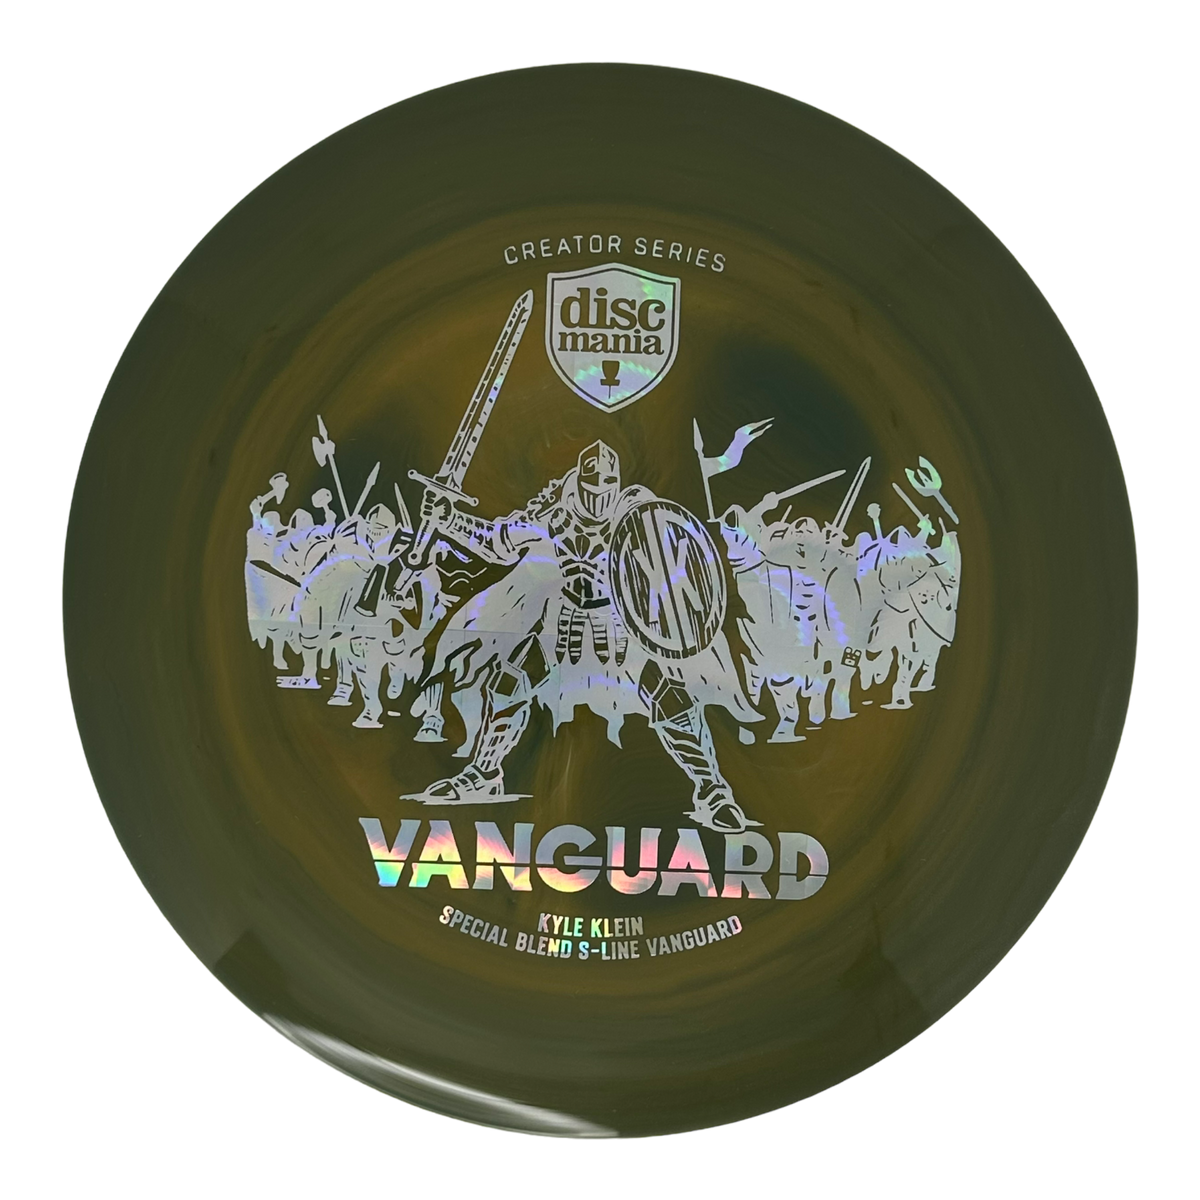 Discmania Special Blend S-Line Vanguard - Kyle Klein Creator Series